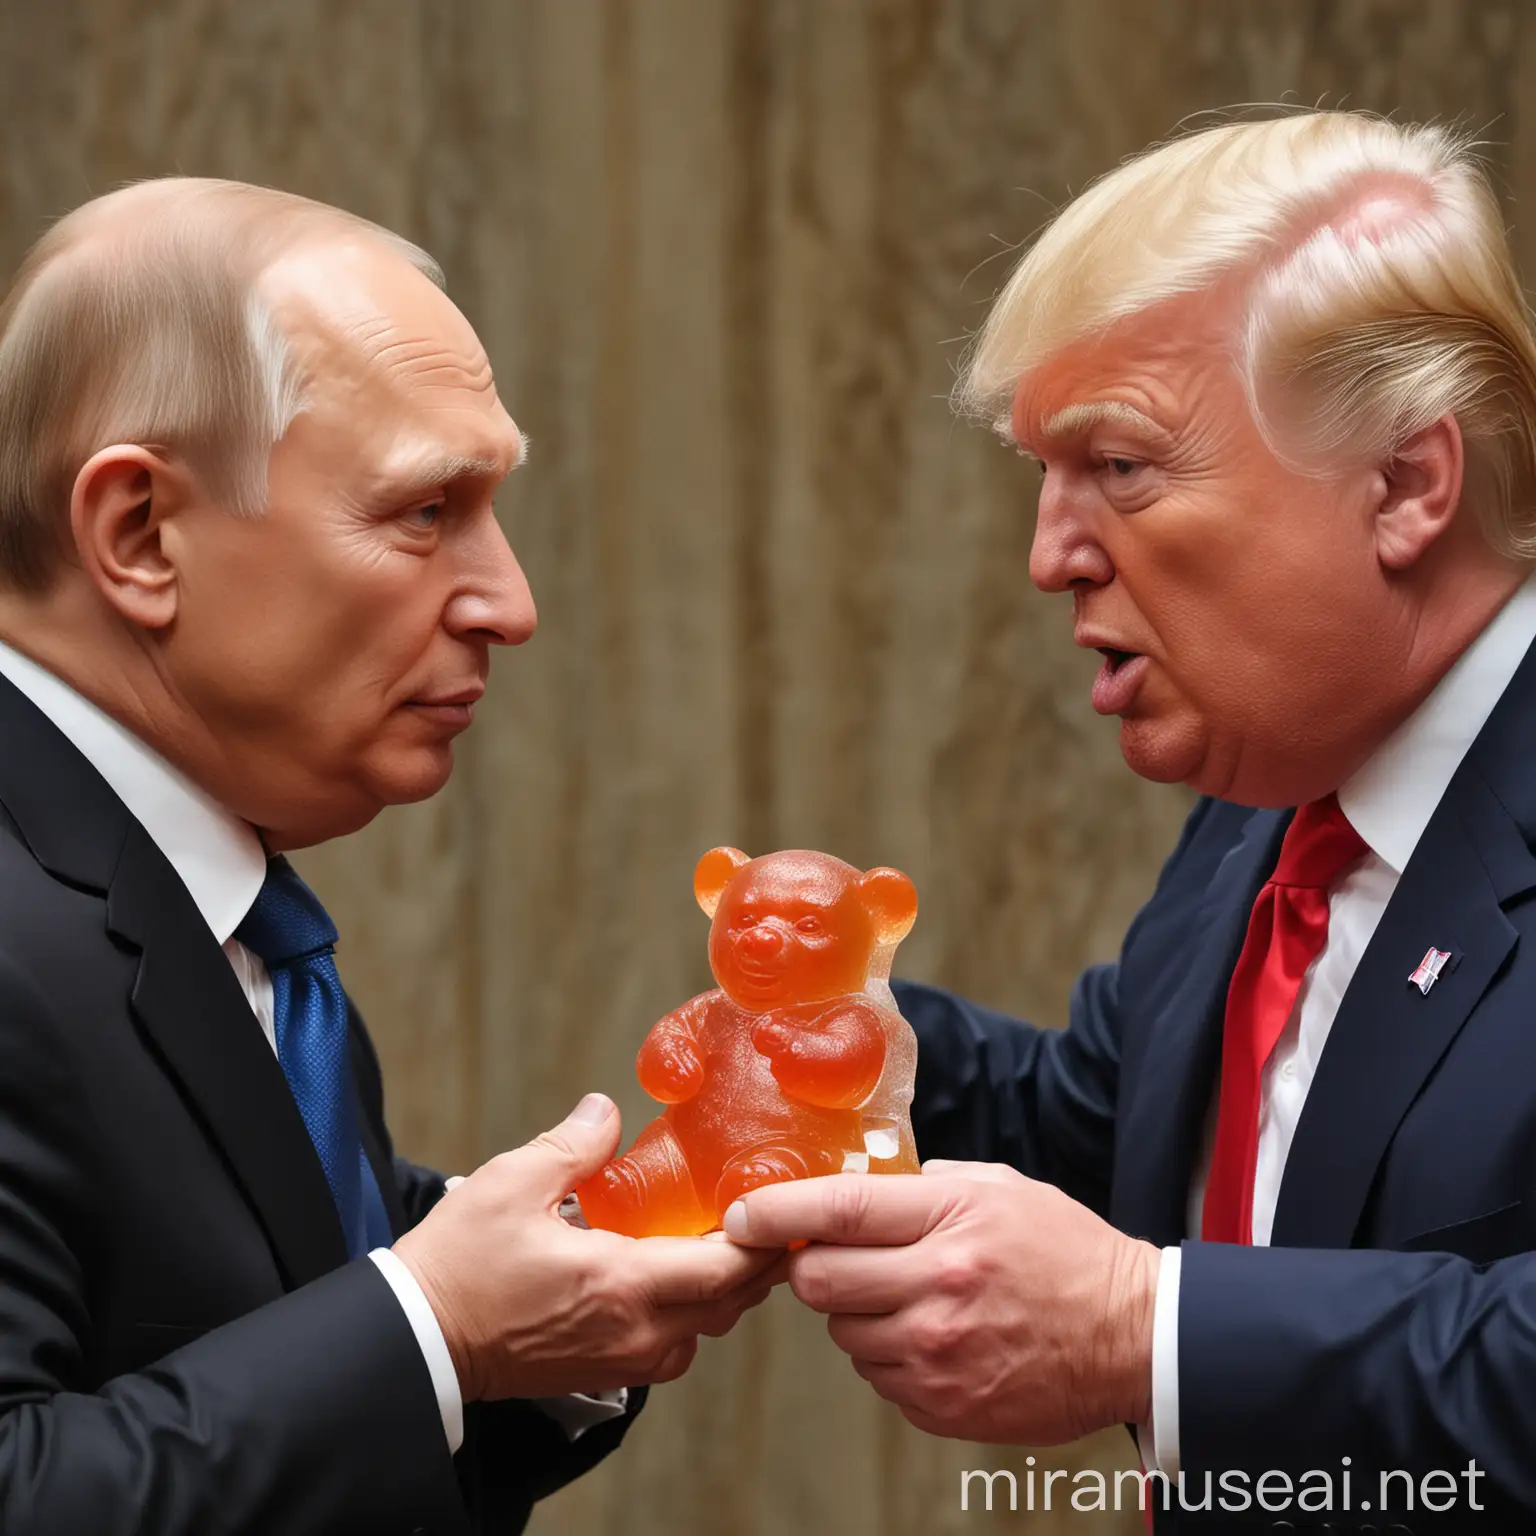 Vladimir Putin and Donald Trump Enjoying Giant Gummy Bears